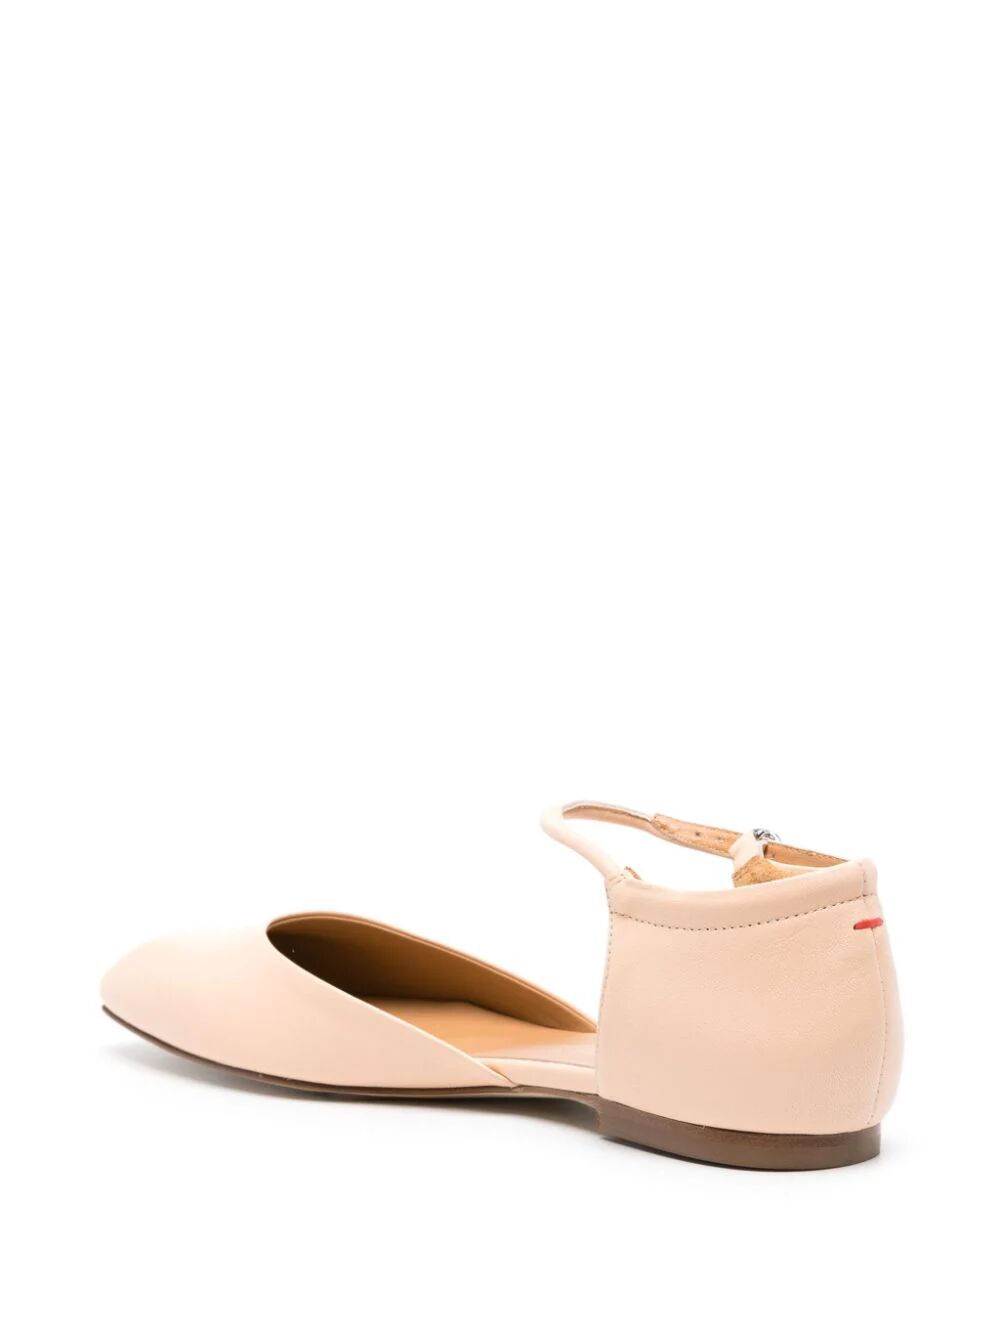 Miri Nappa Leather Peach Shoes